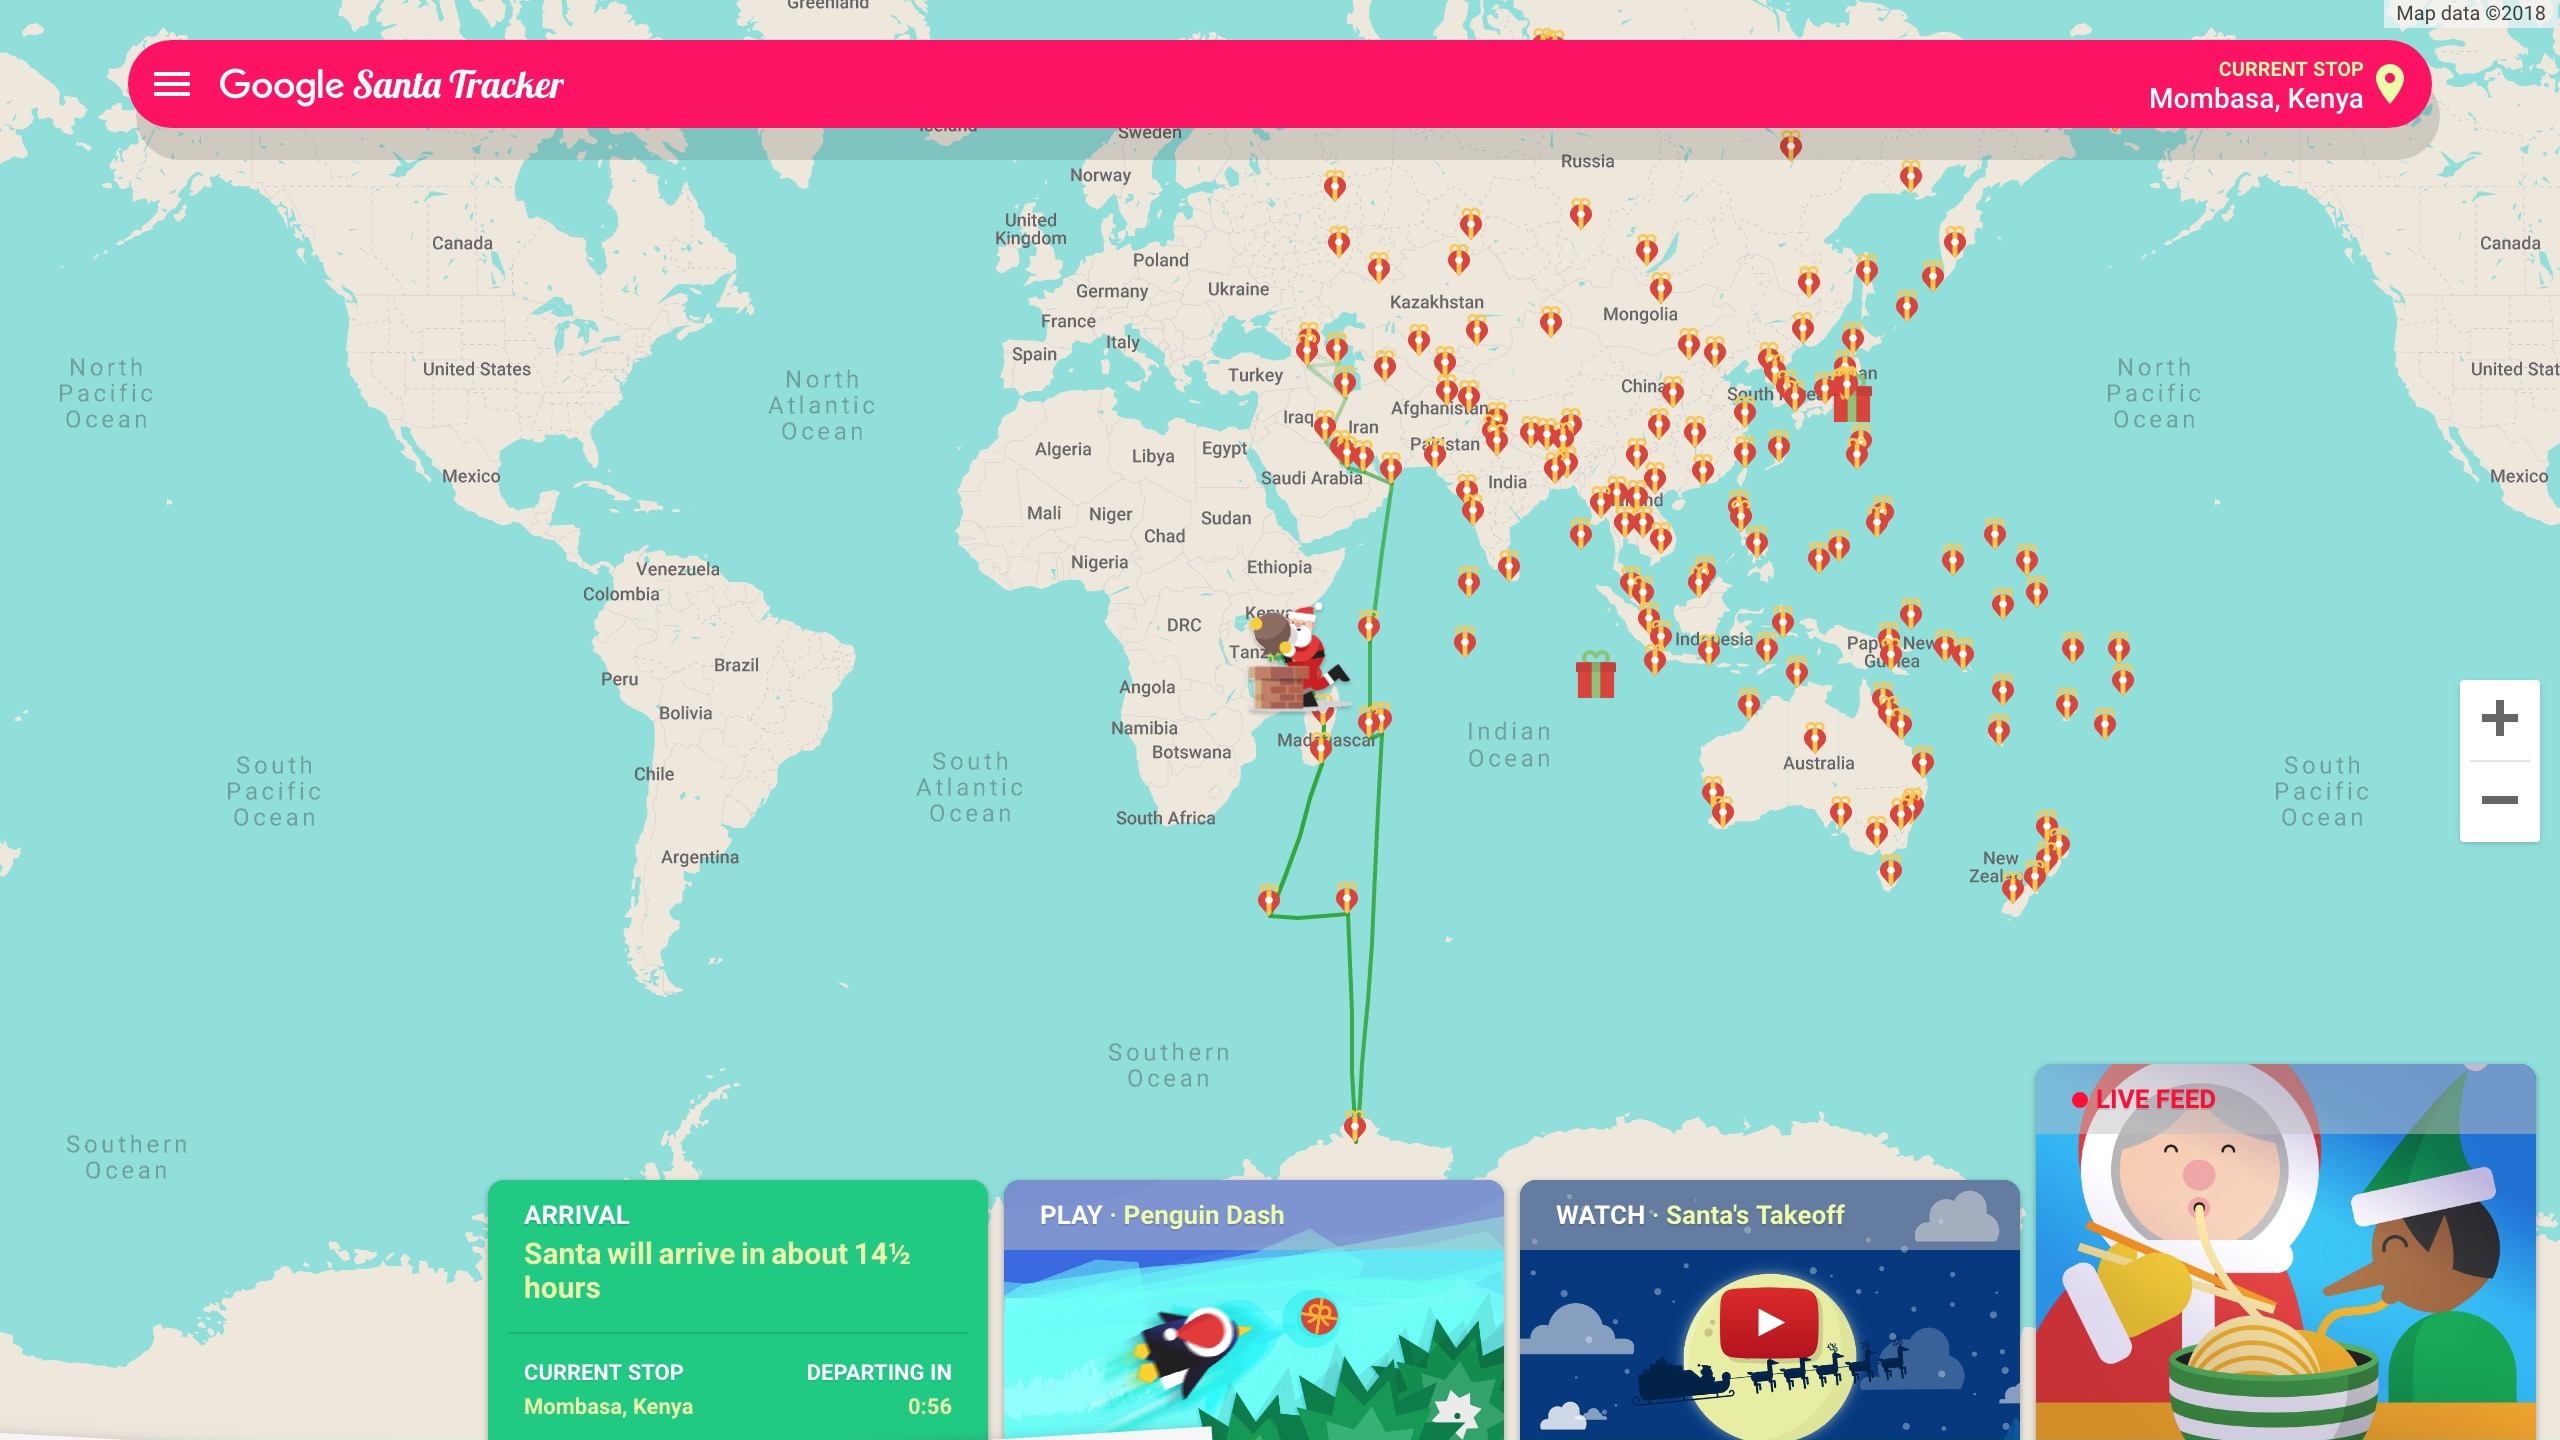 How to follow Santa on Christmas Eve with Google Santa Tracker, Home